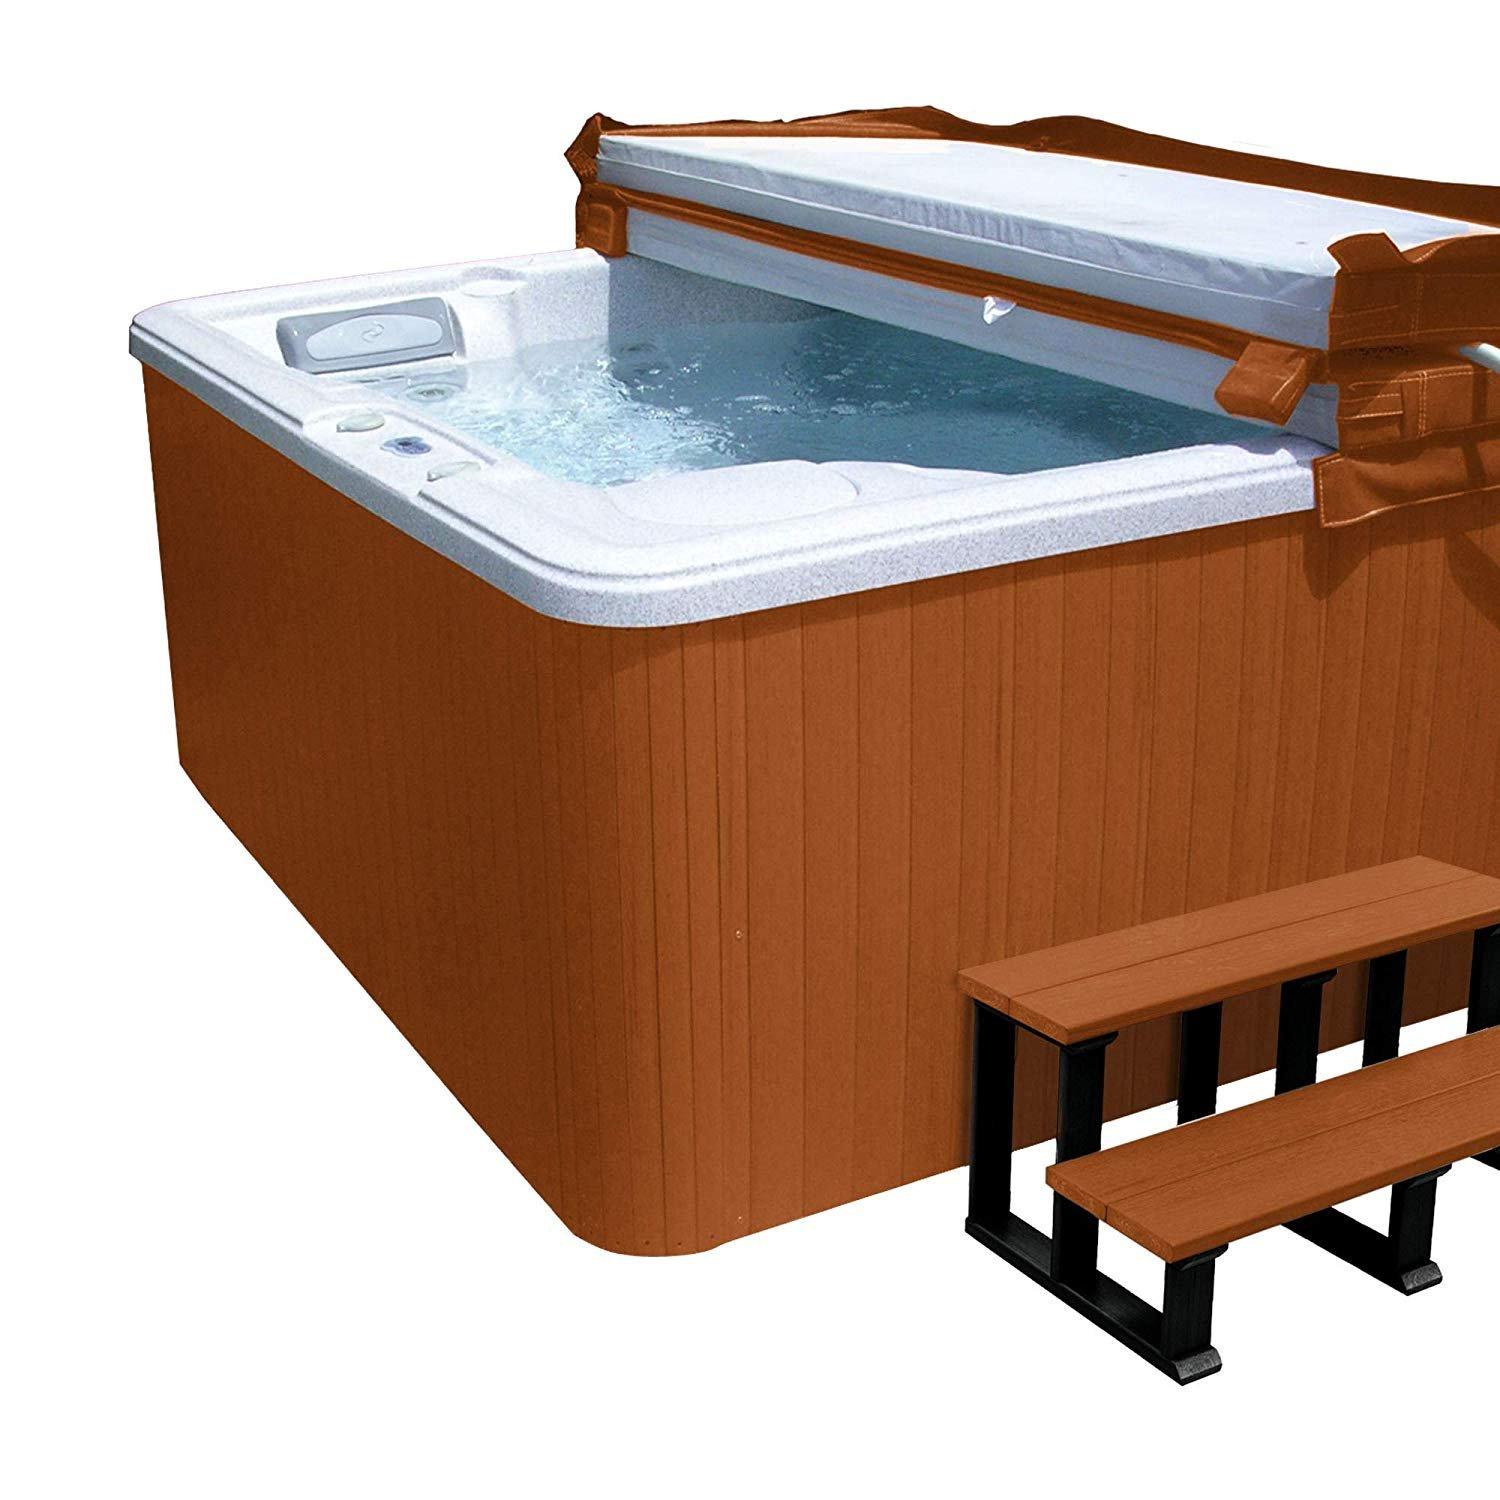 Highwood USA Spa Cabinets and Hot Tub Siding Redwood